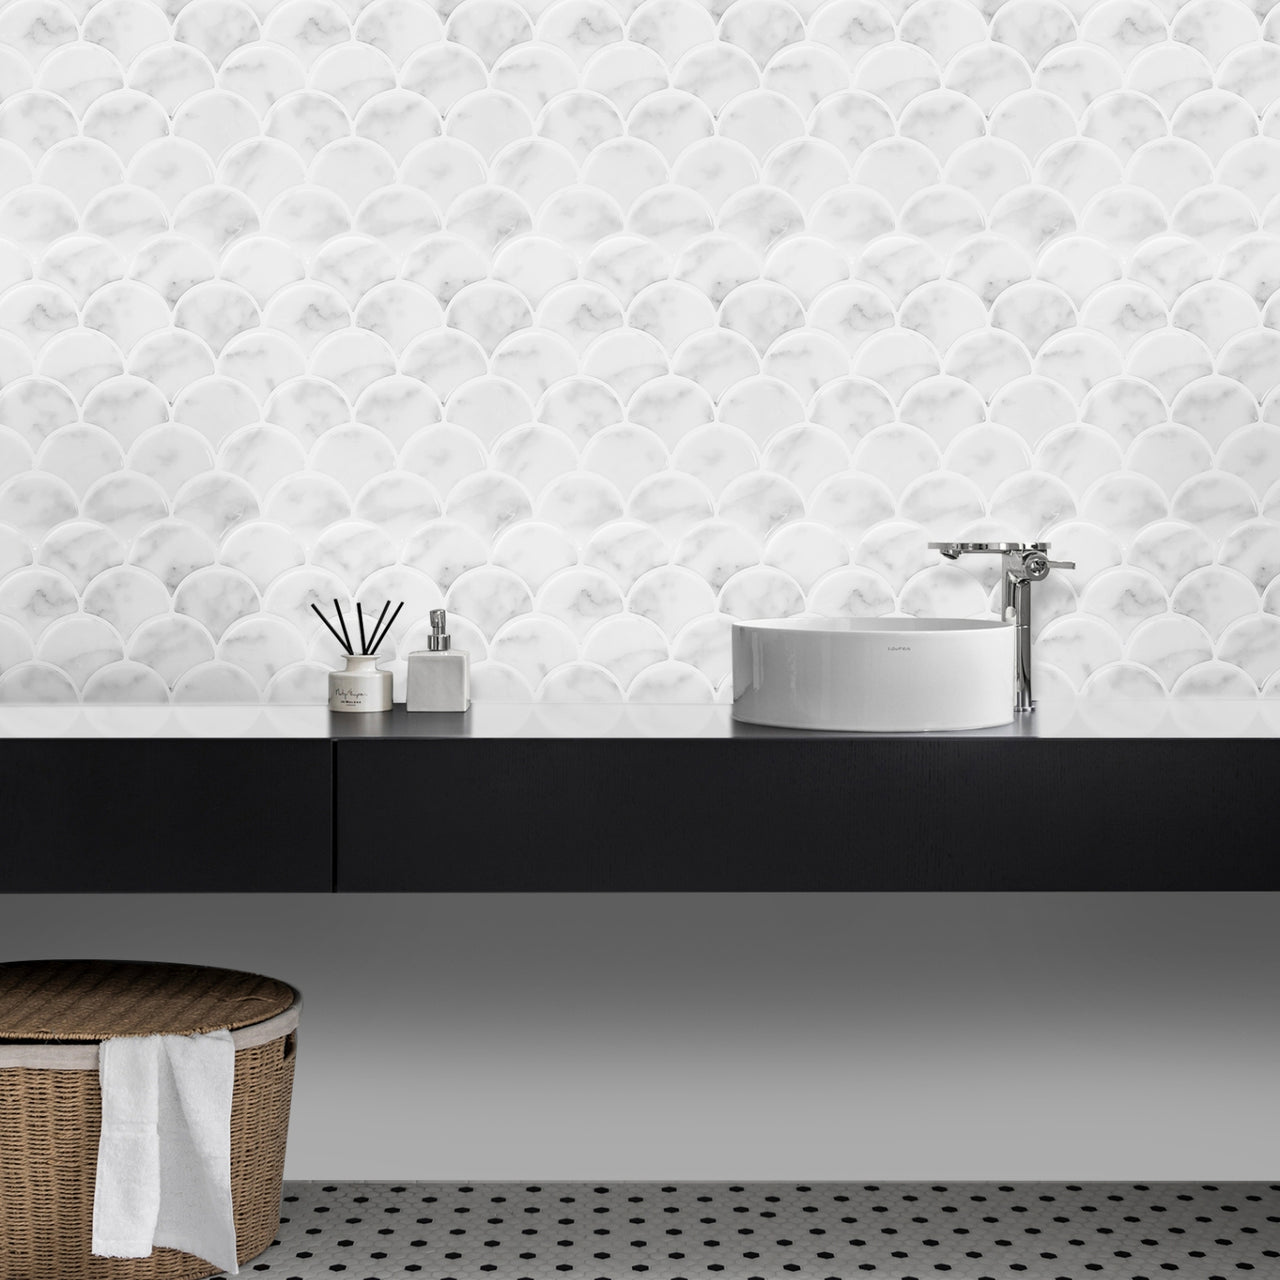 White and grey marble oriental fan tiles as a splash back